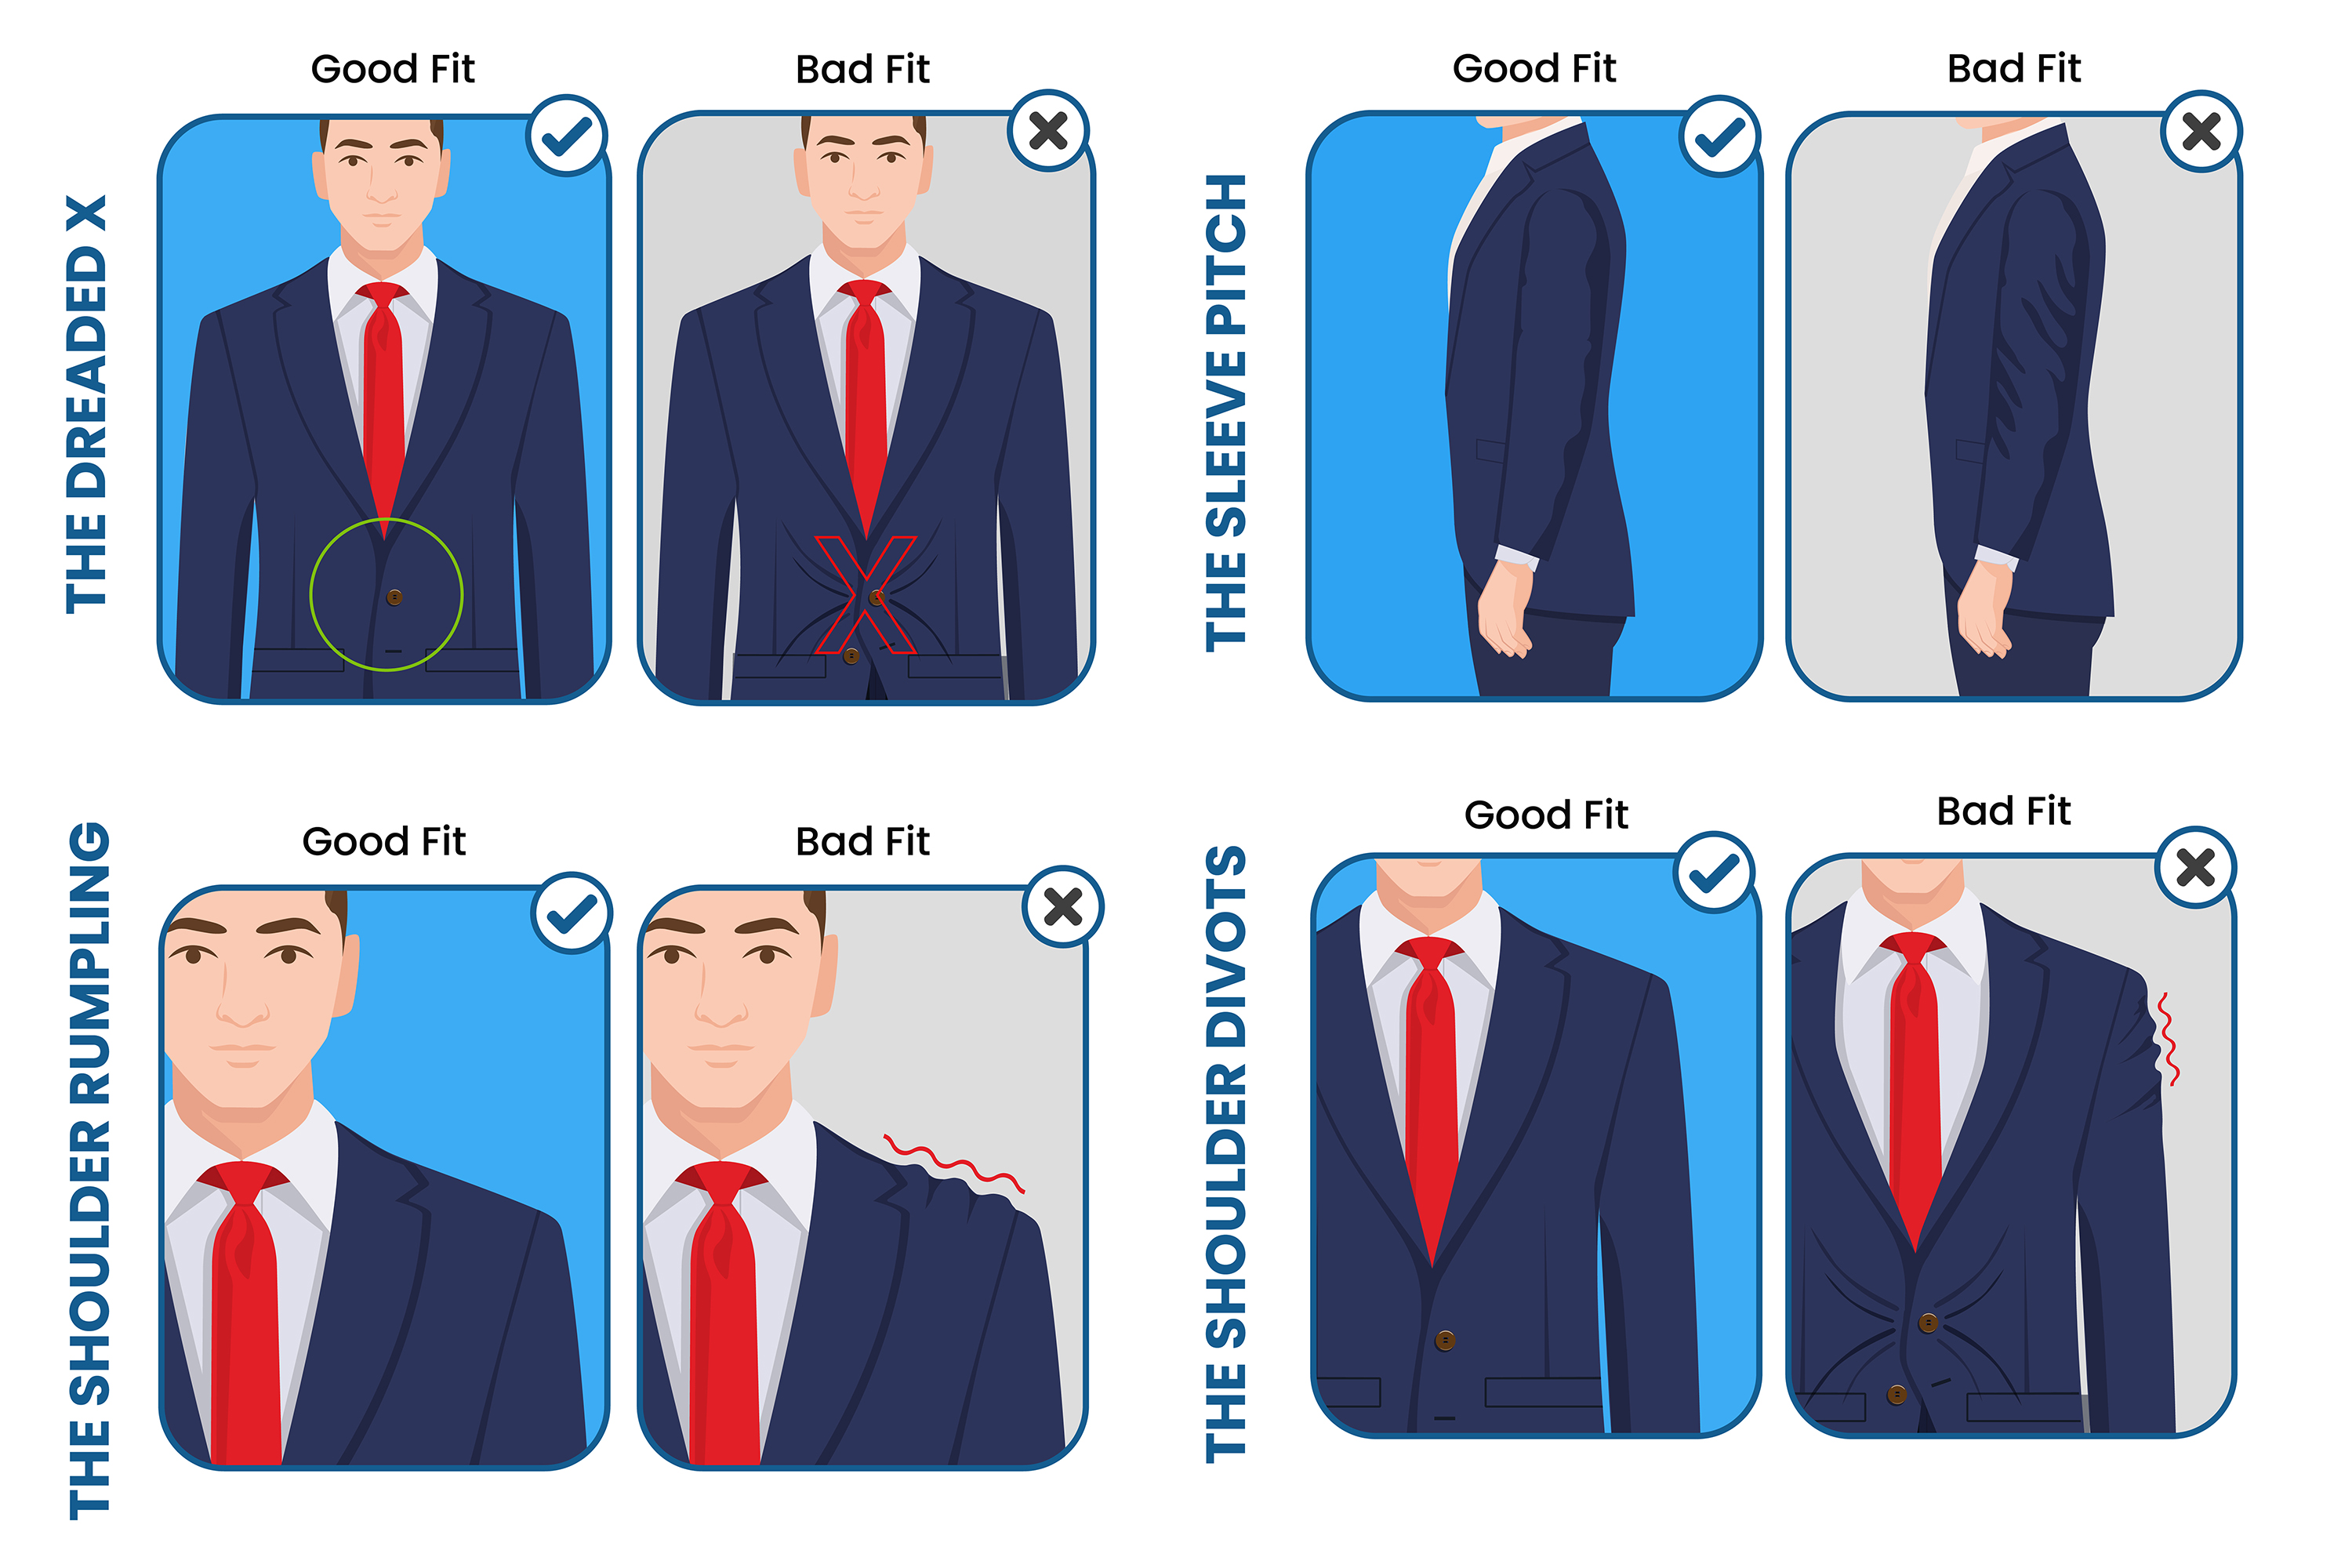 Best Affordable Suits for Men under $500 - Suits Expert